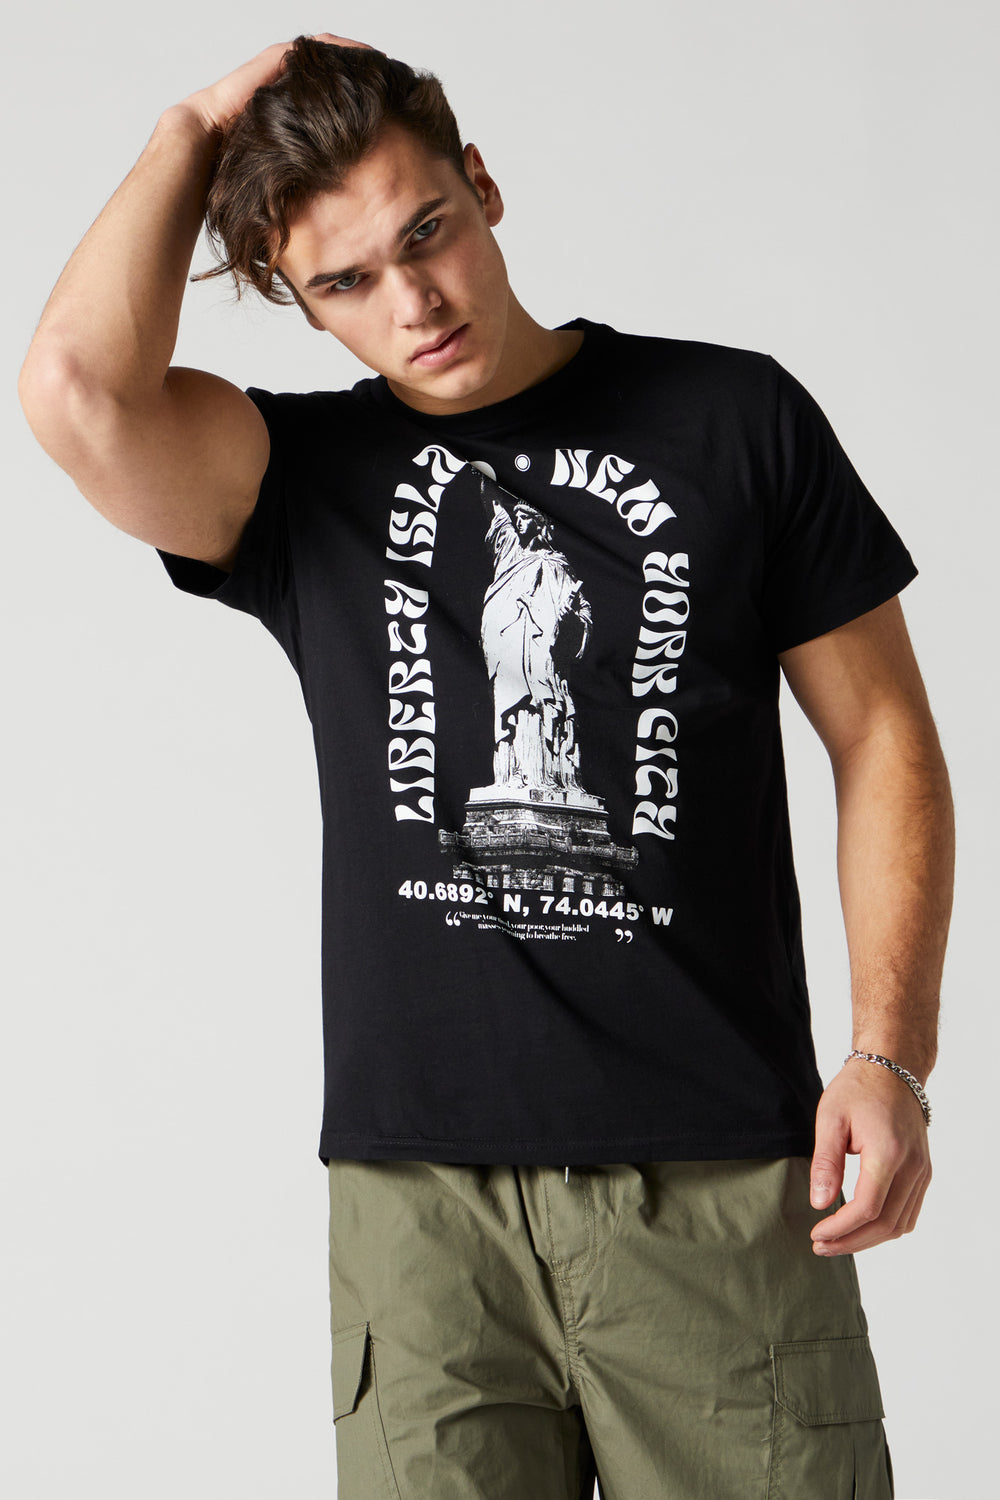 NYC Liberty Island Graphic T-Shirt NYC Liberty Island Graphic T-Shirt 2